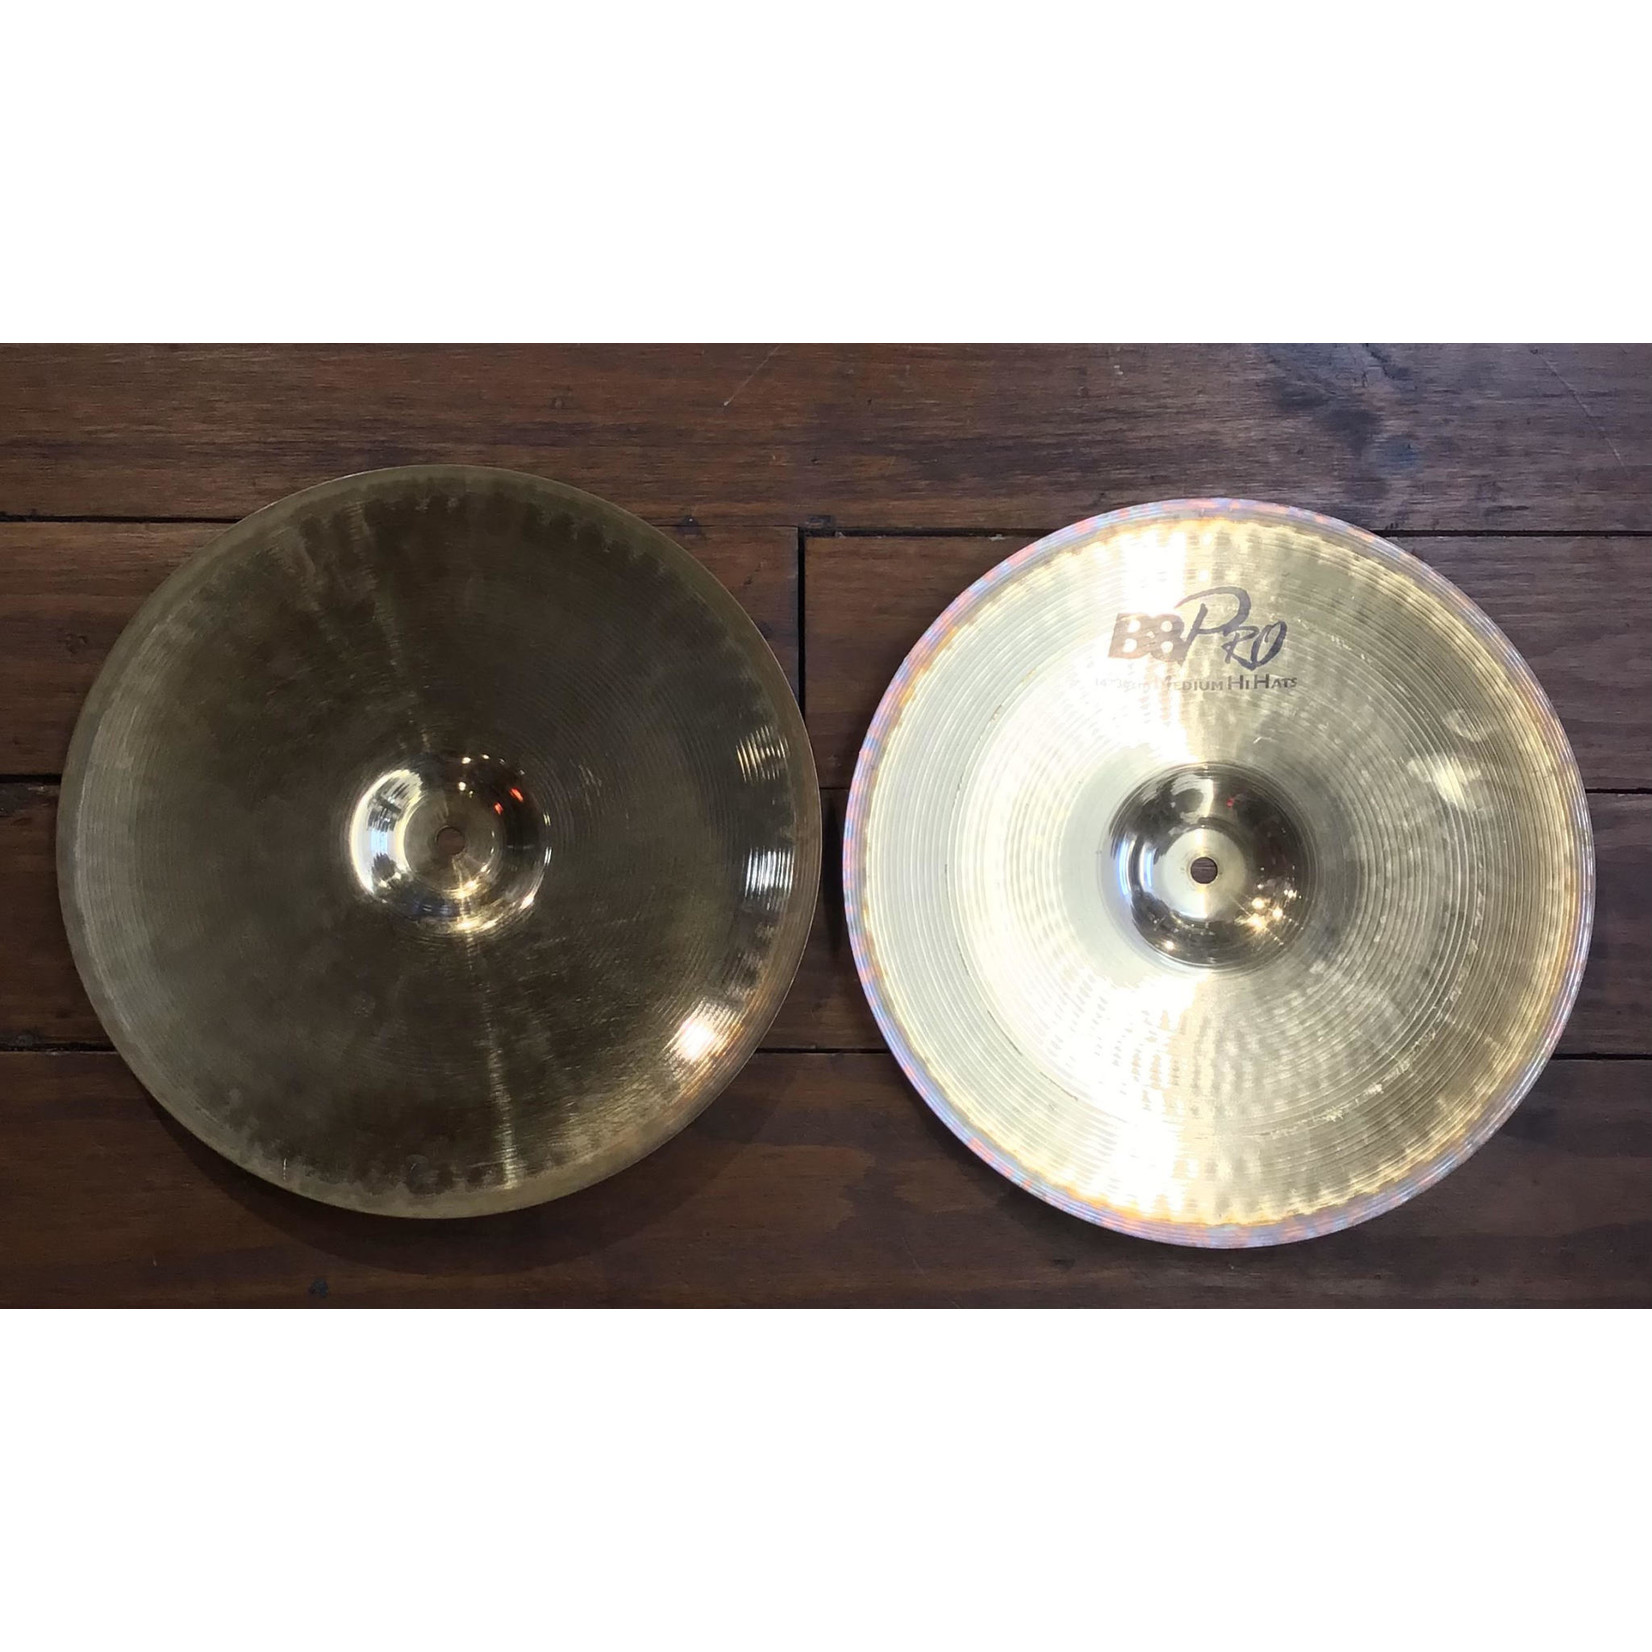 Sabian USED Sabian B8 Pro 14" Medium Hi-Hat Cymbals (Pair)